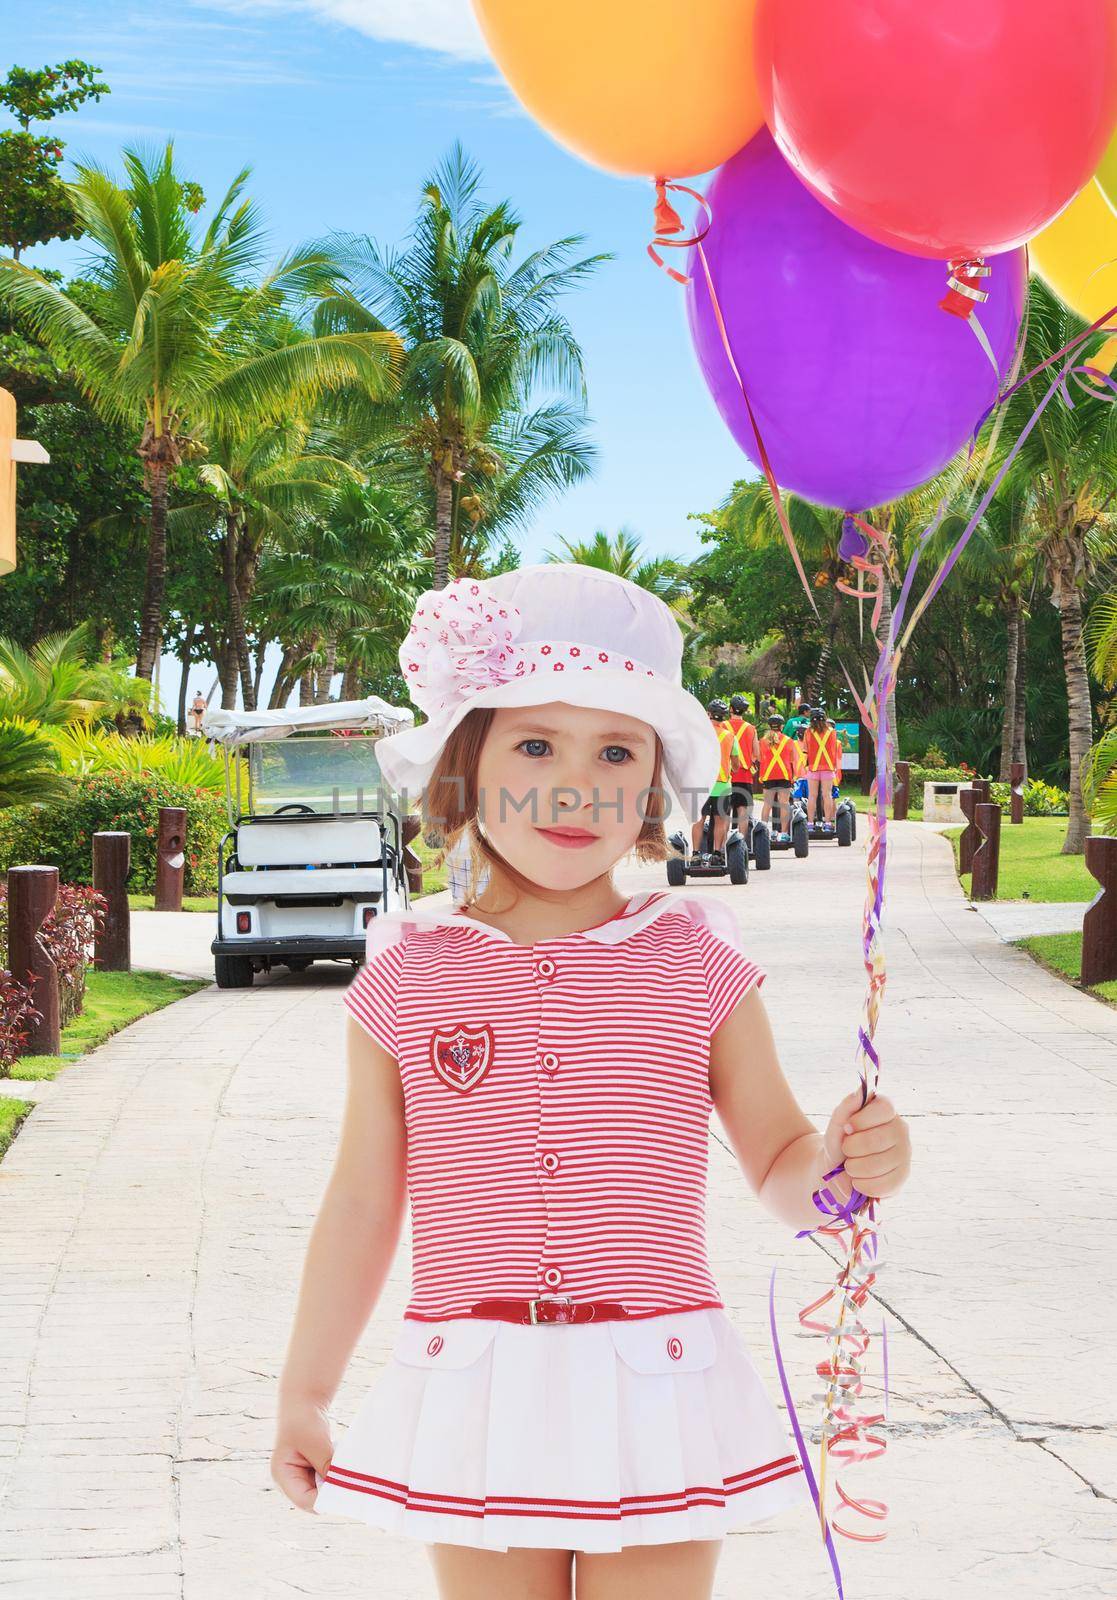 Girl holding balloons by kolesnikov_studio